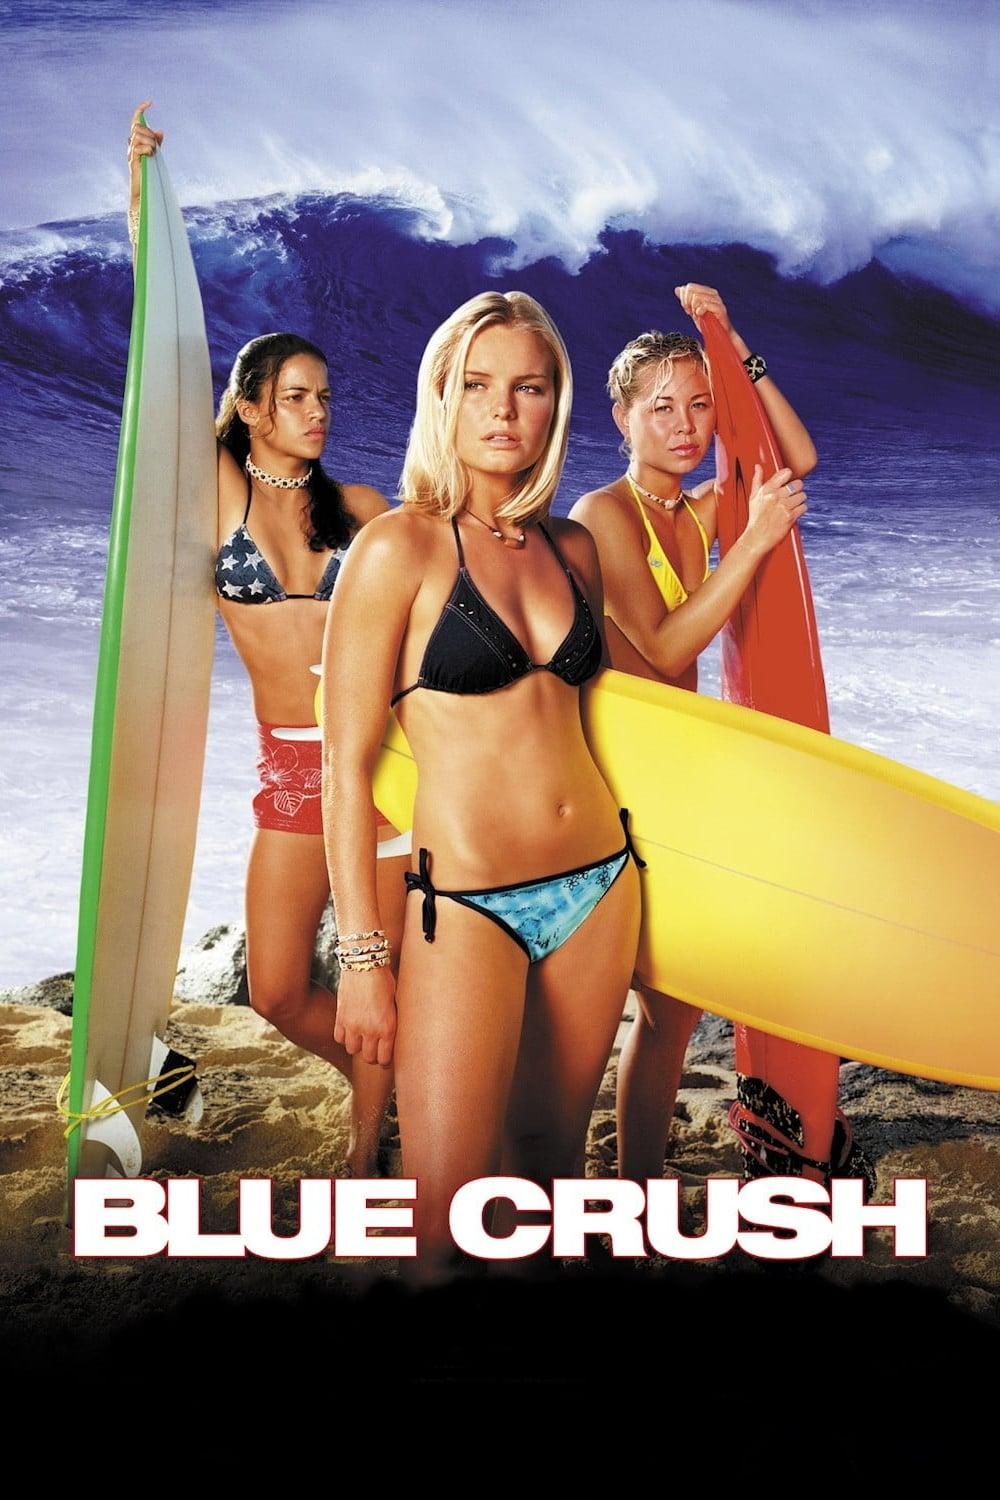 Blue Crush poster